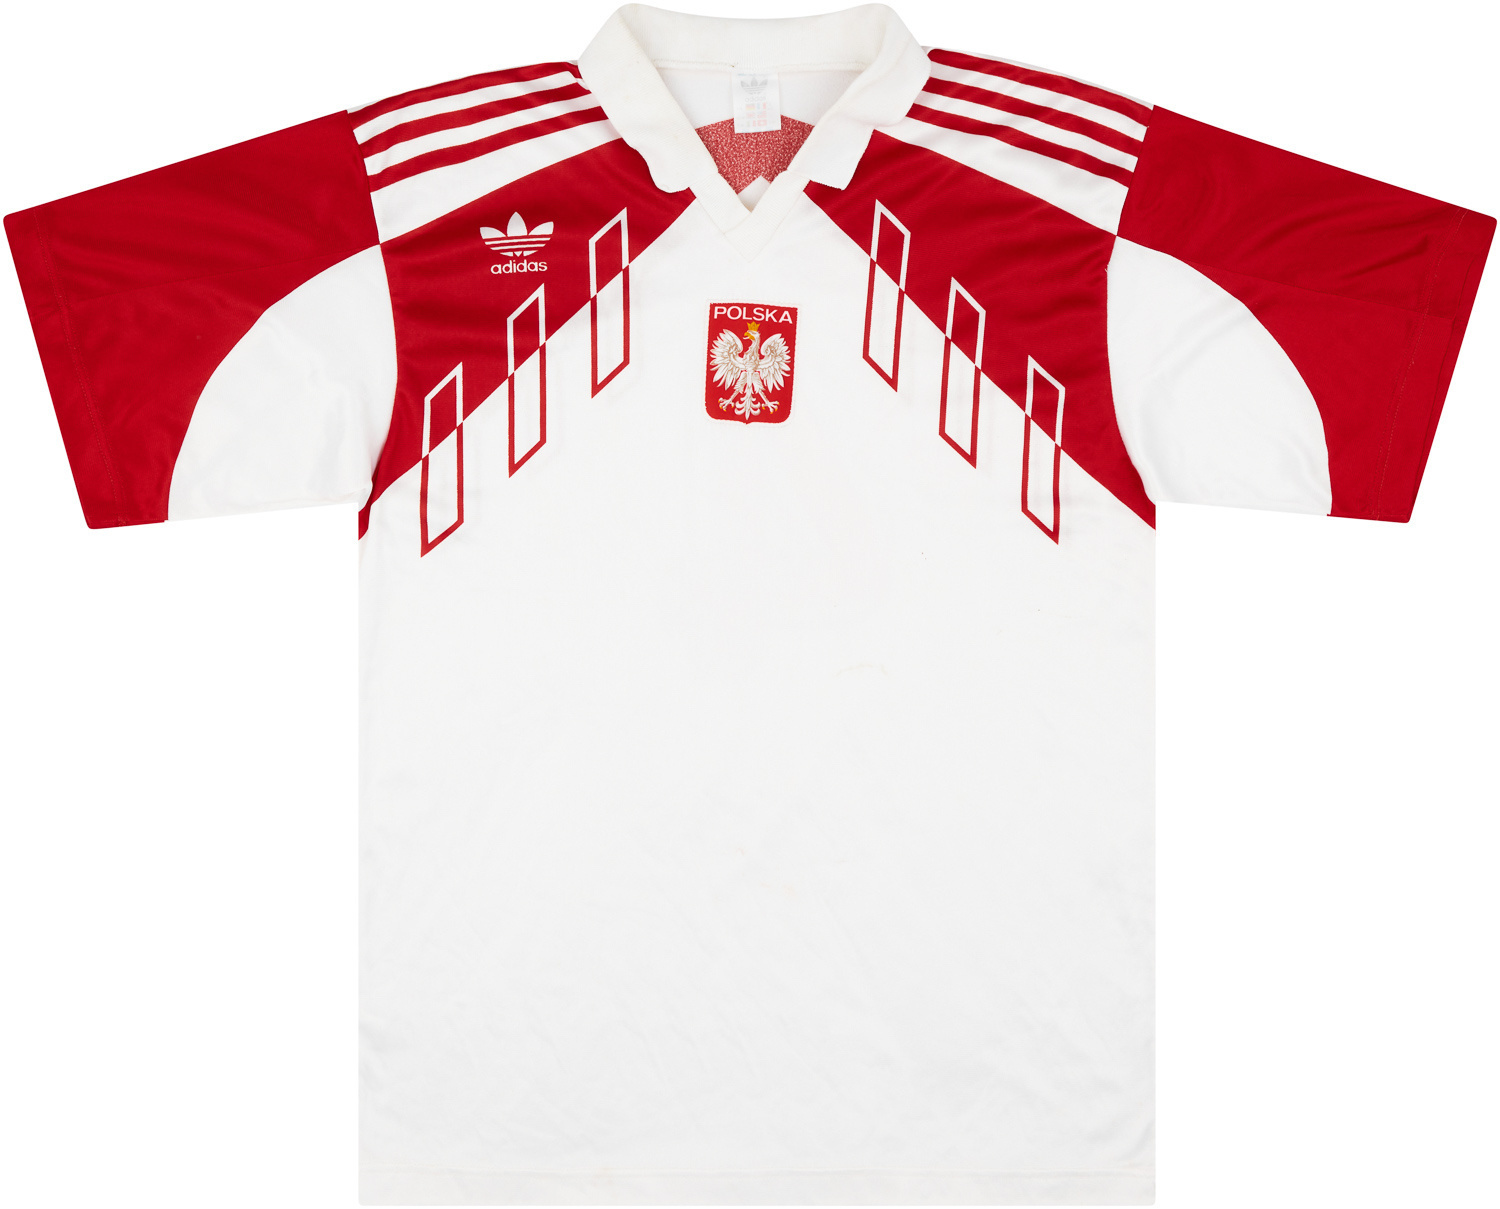 1991 Poland Match Worn Home Shirt #4 (Wdowczyk) v Republic of Ireland